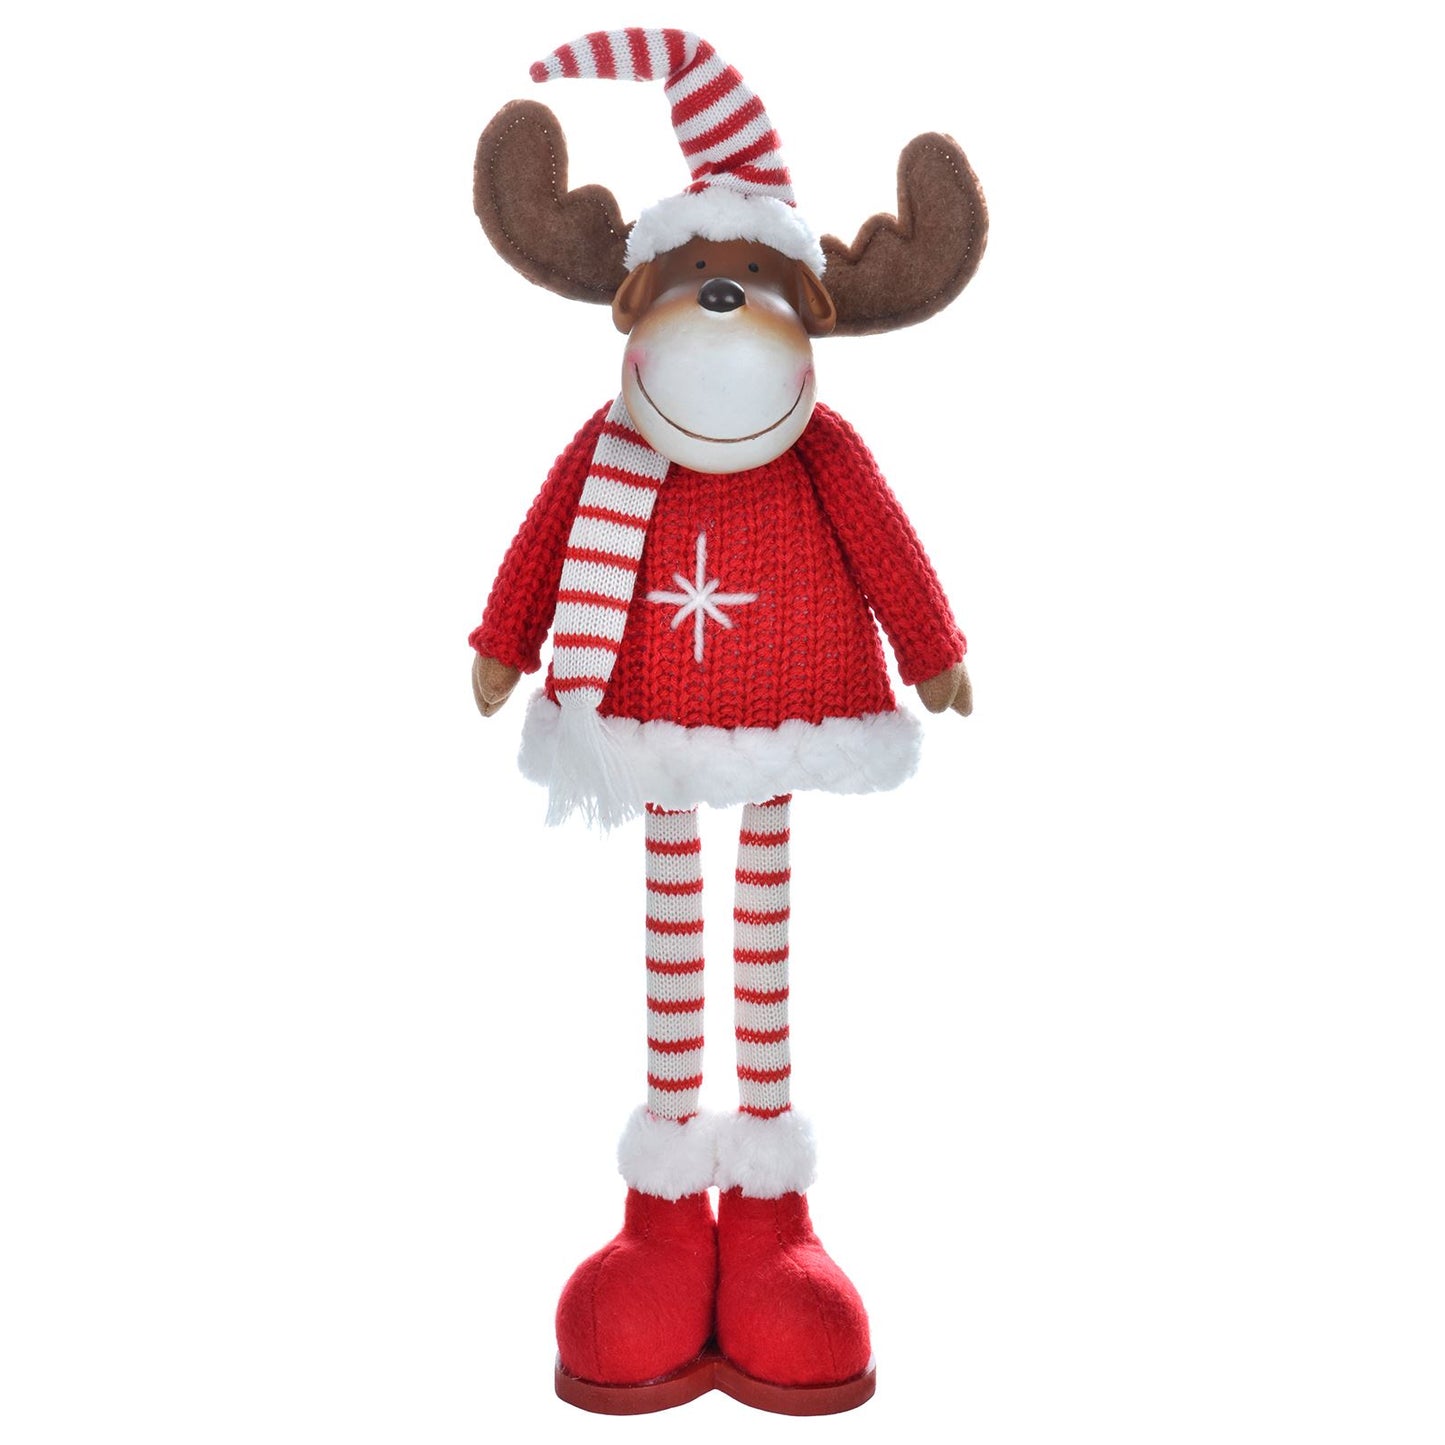 Mr Crimbo Plush Reindeer Figure Novelty Decoration Red White - MrCrimbo.co.uk -XS5138 - Reindeer Striped Trousers